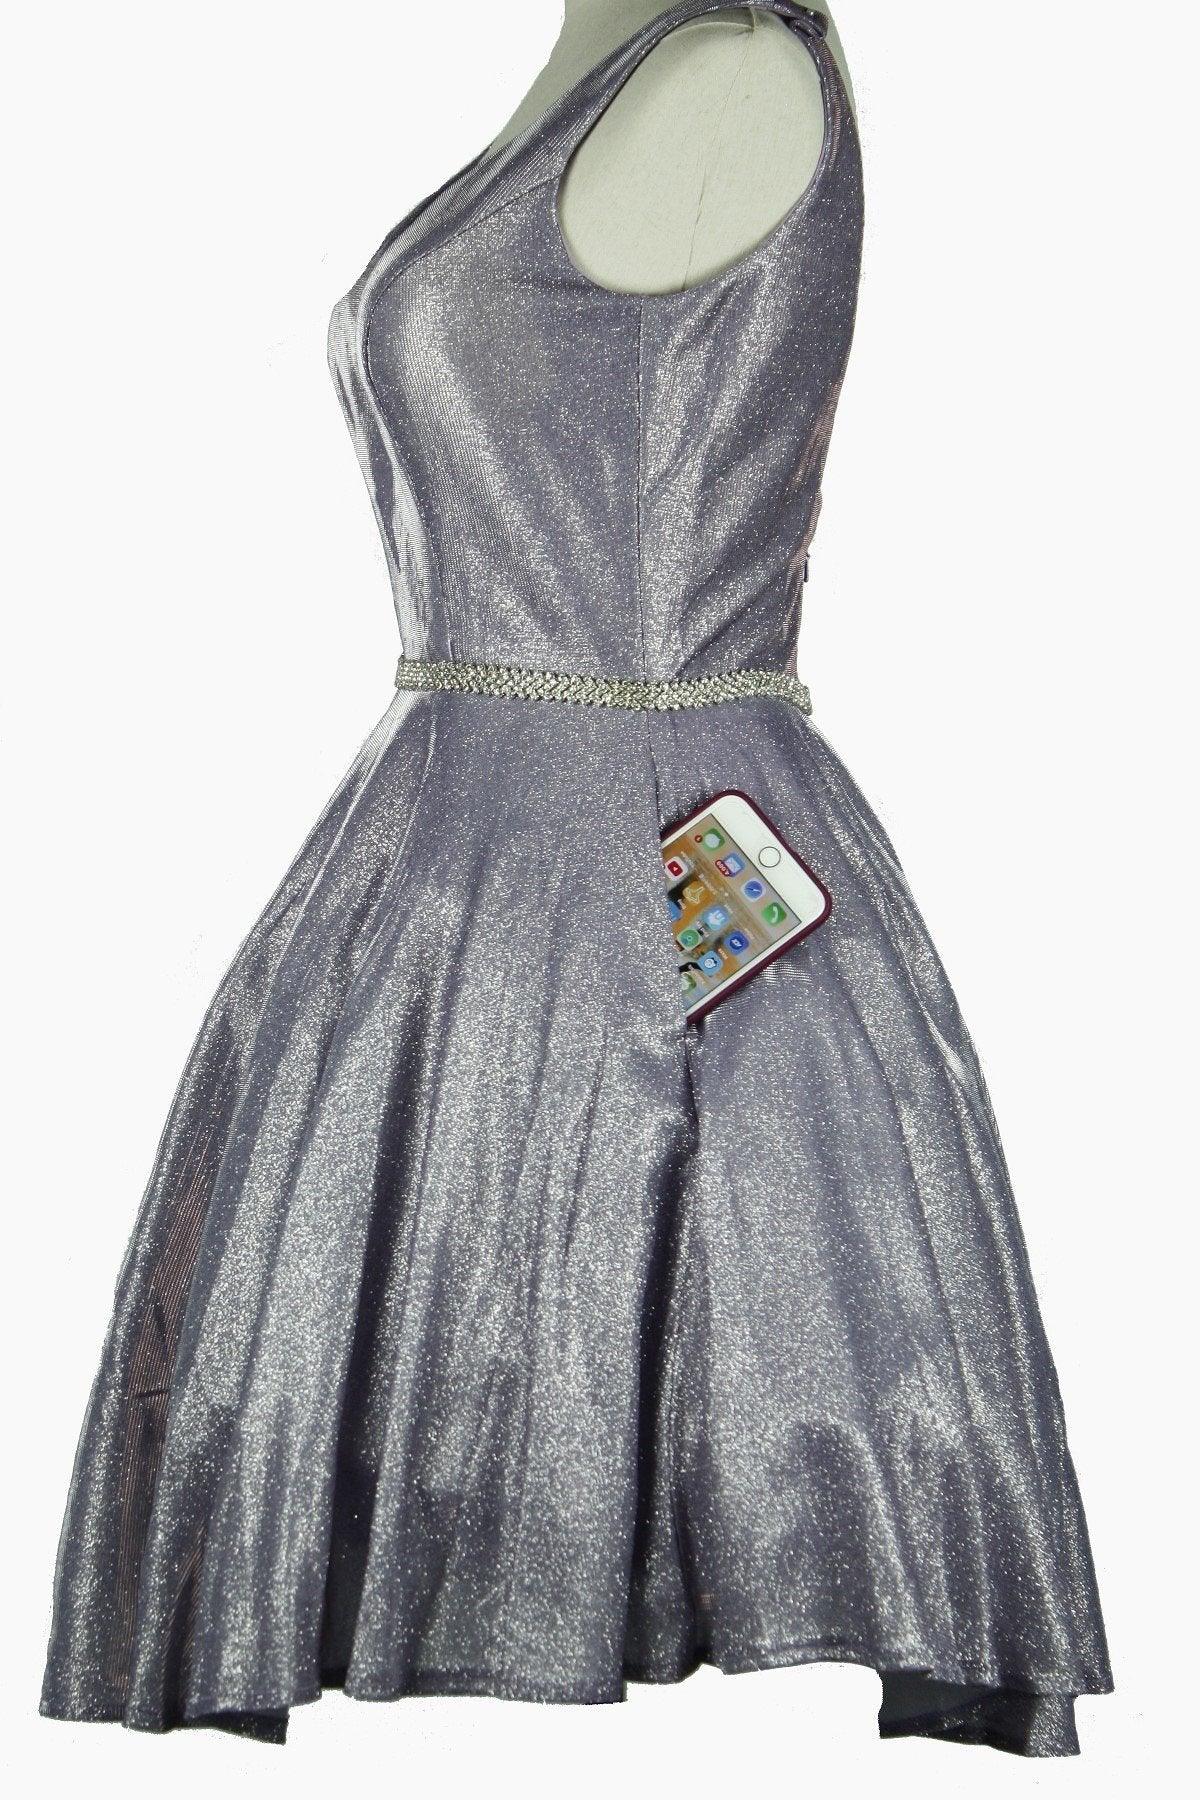 Prom Short Sleeveless Metallic Glitter Dress - The Dress Outlet